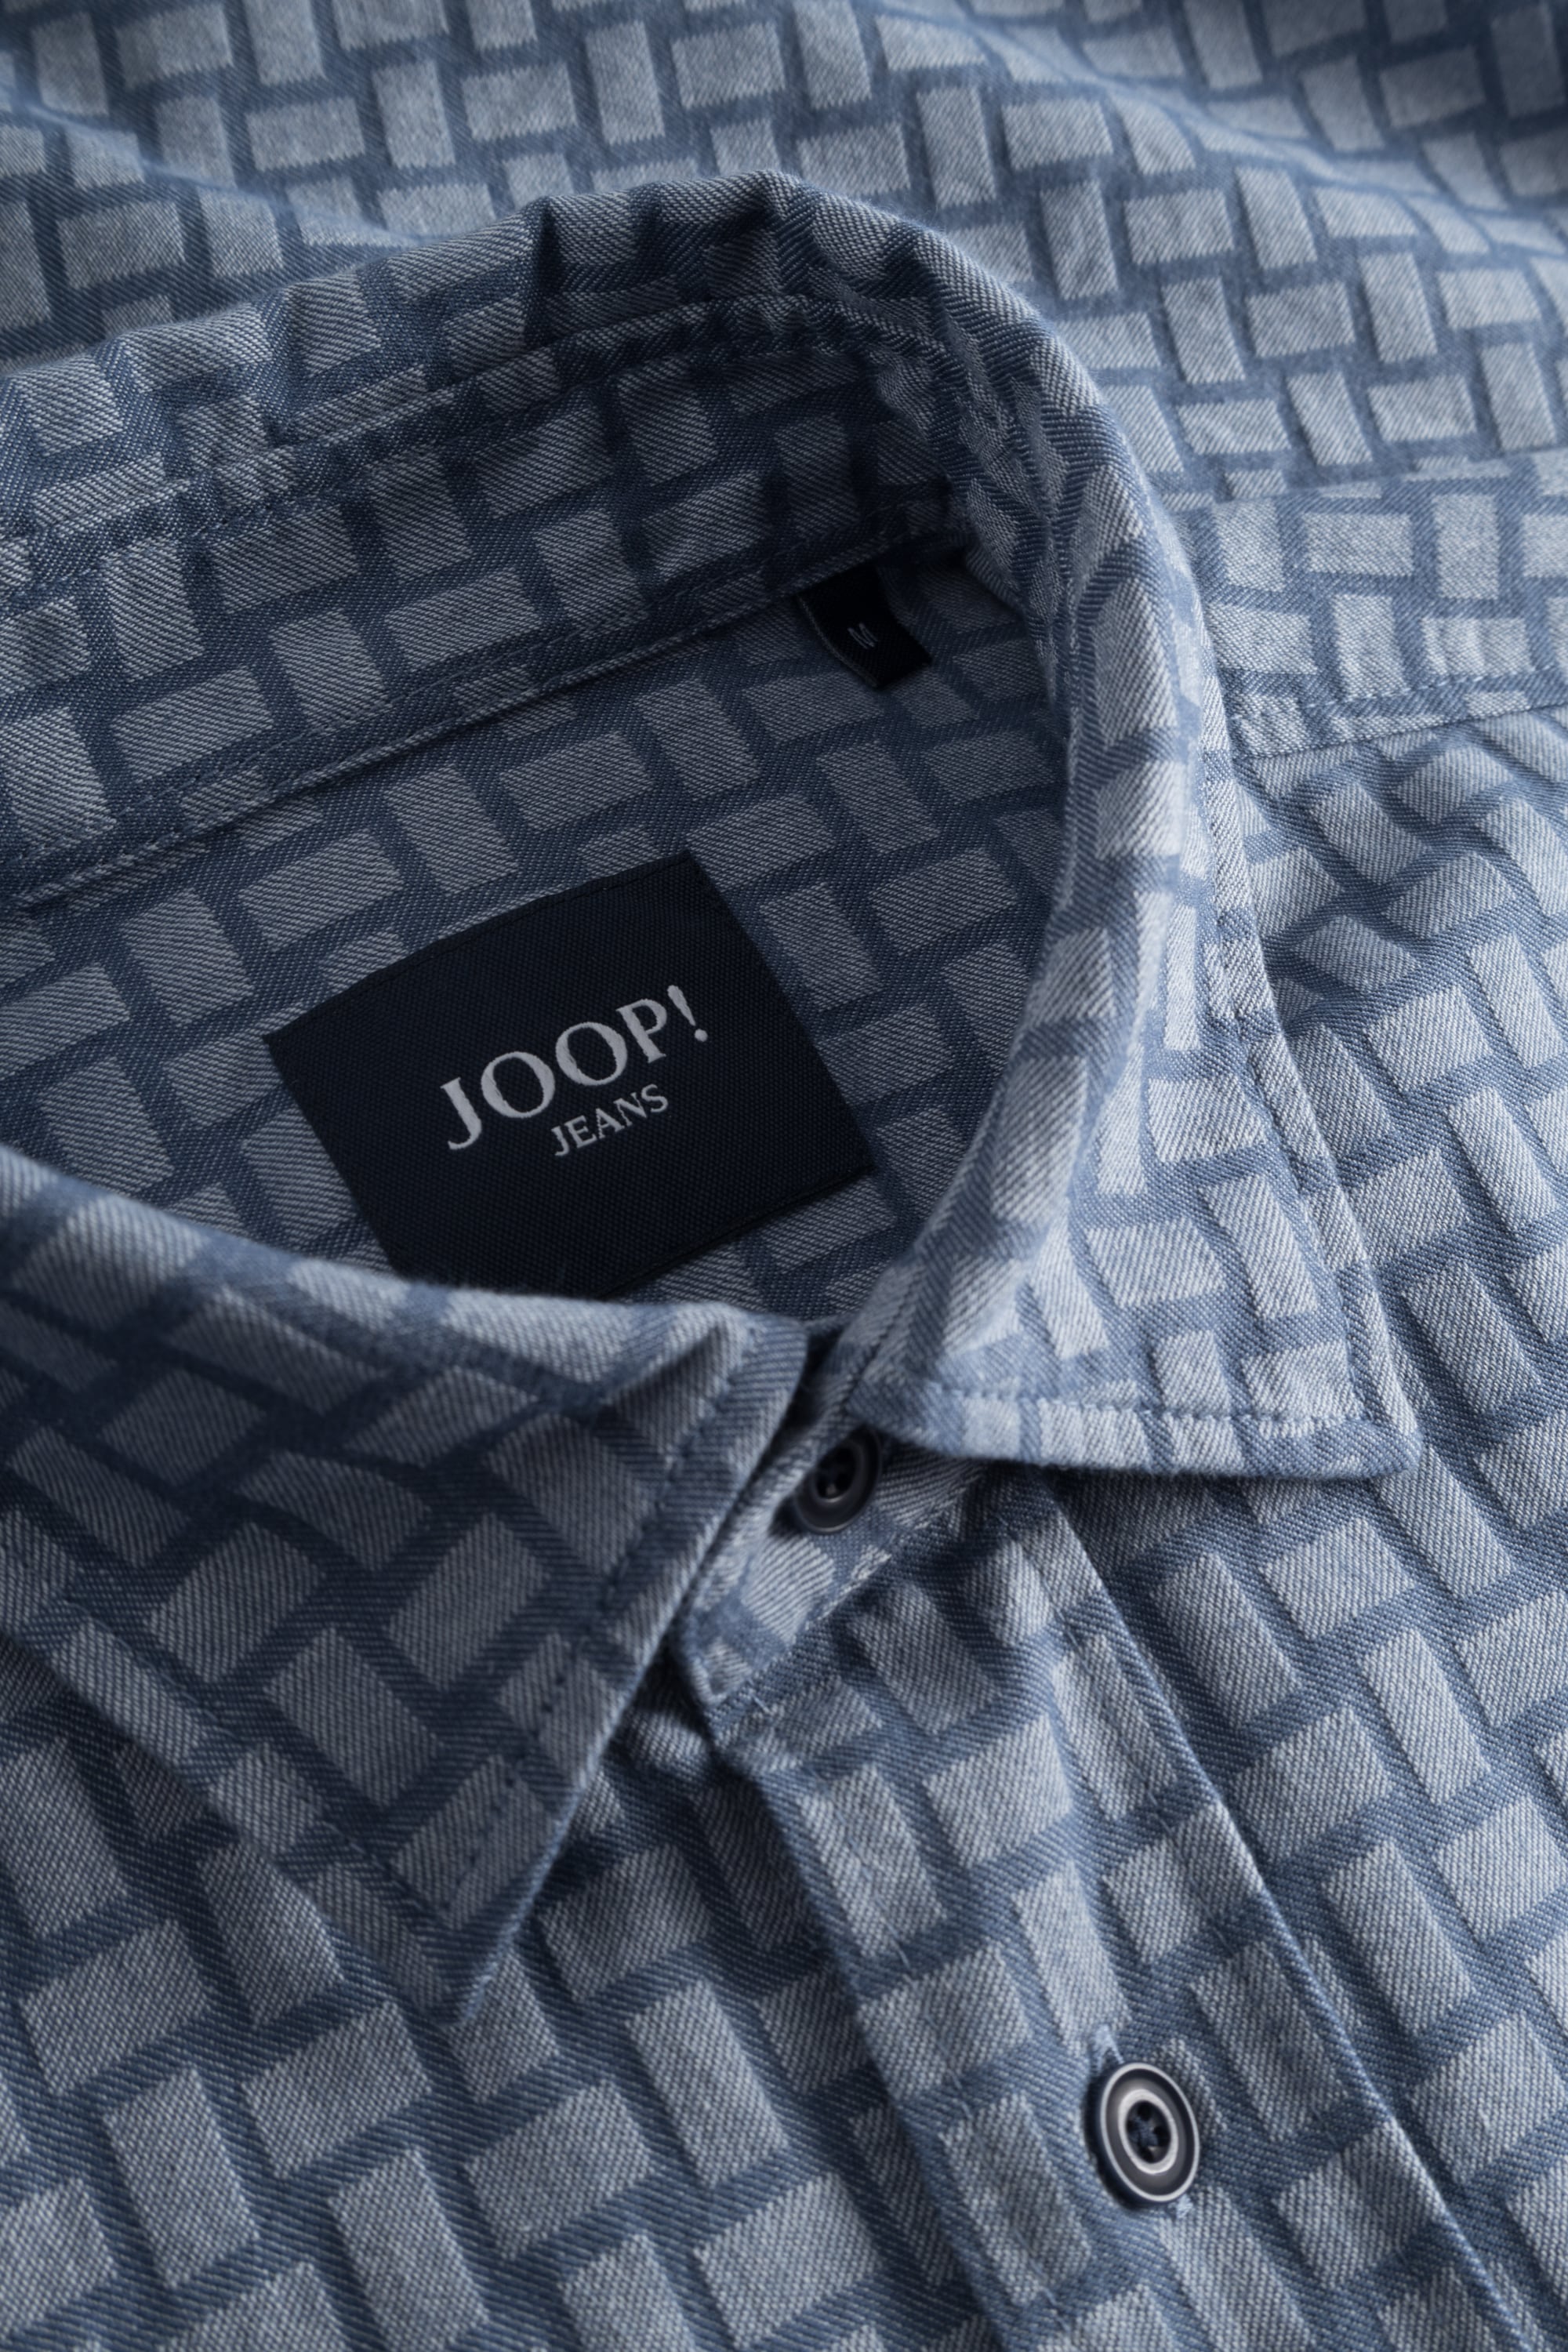 Joop Jeans Langarmhemd »JJSH-107Hale2-W«, mit allover Print